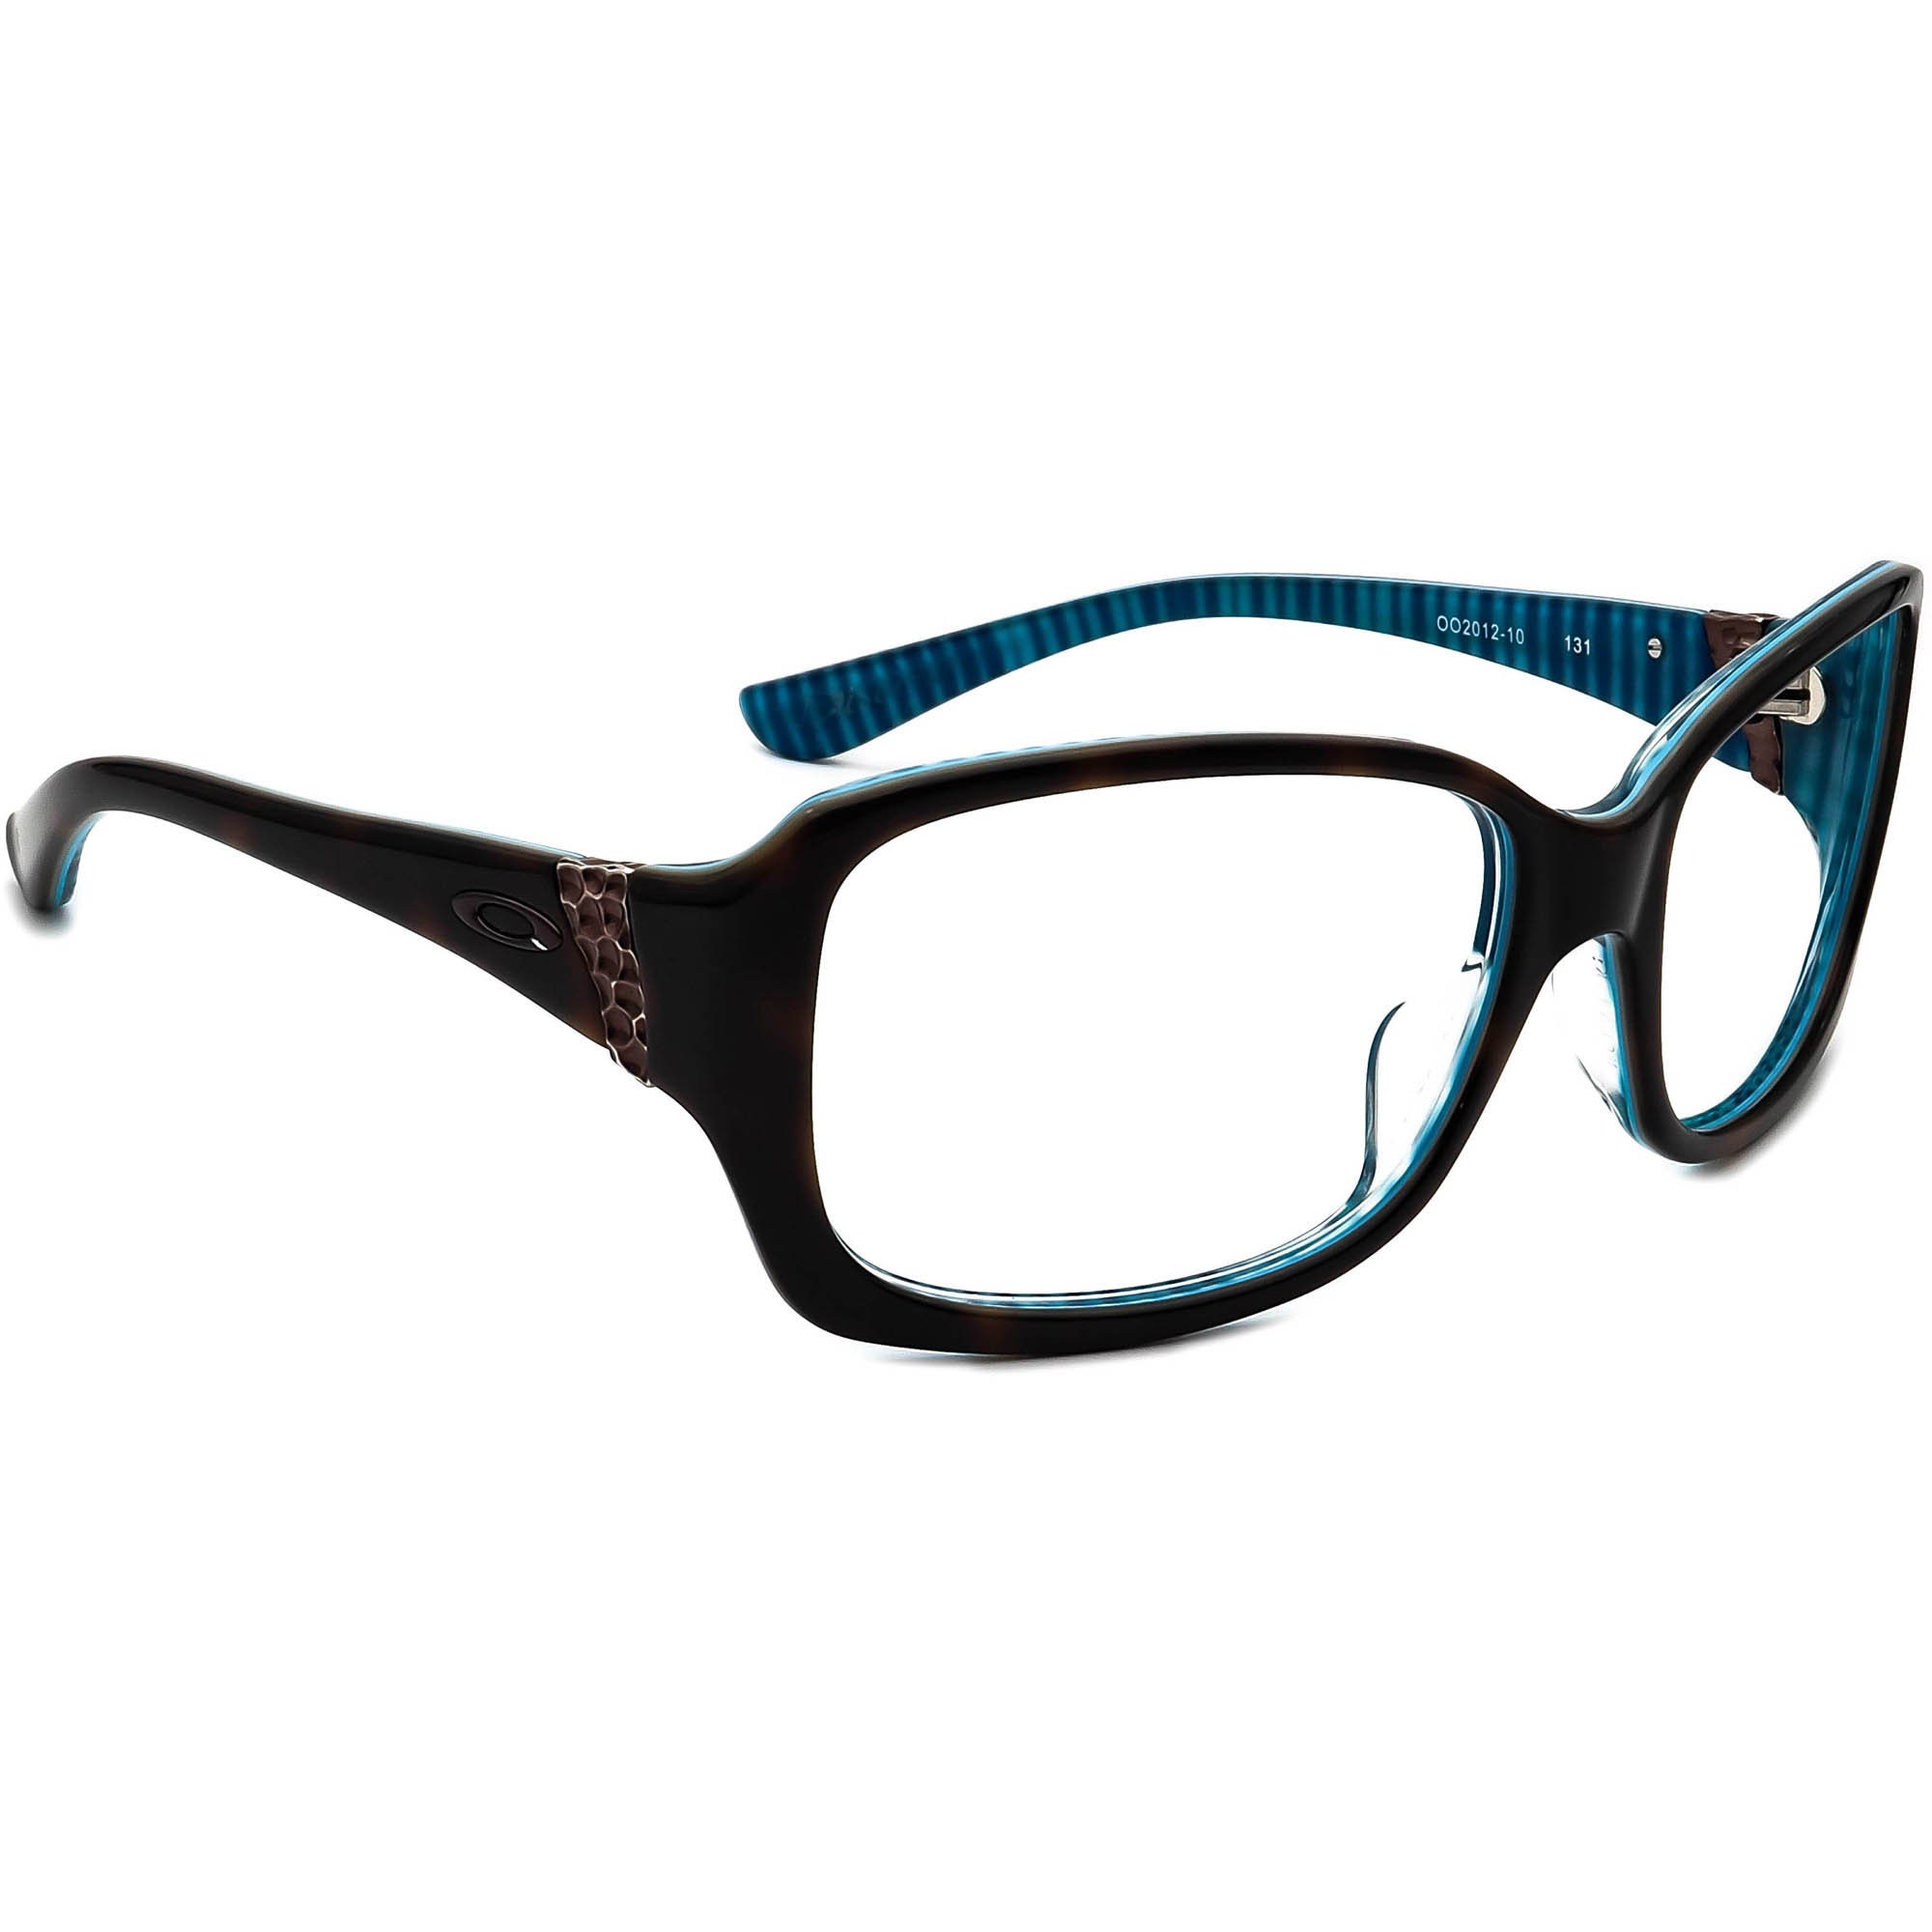 Oakley Sunglasses Frame Only OO2012-10 Discreet Tortoise/blue - Etsy